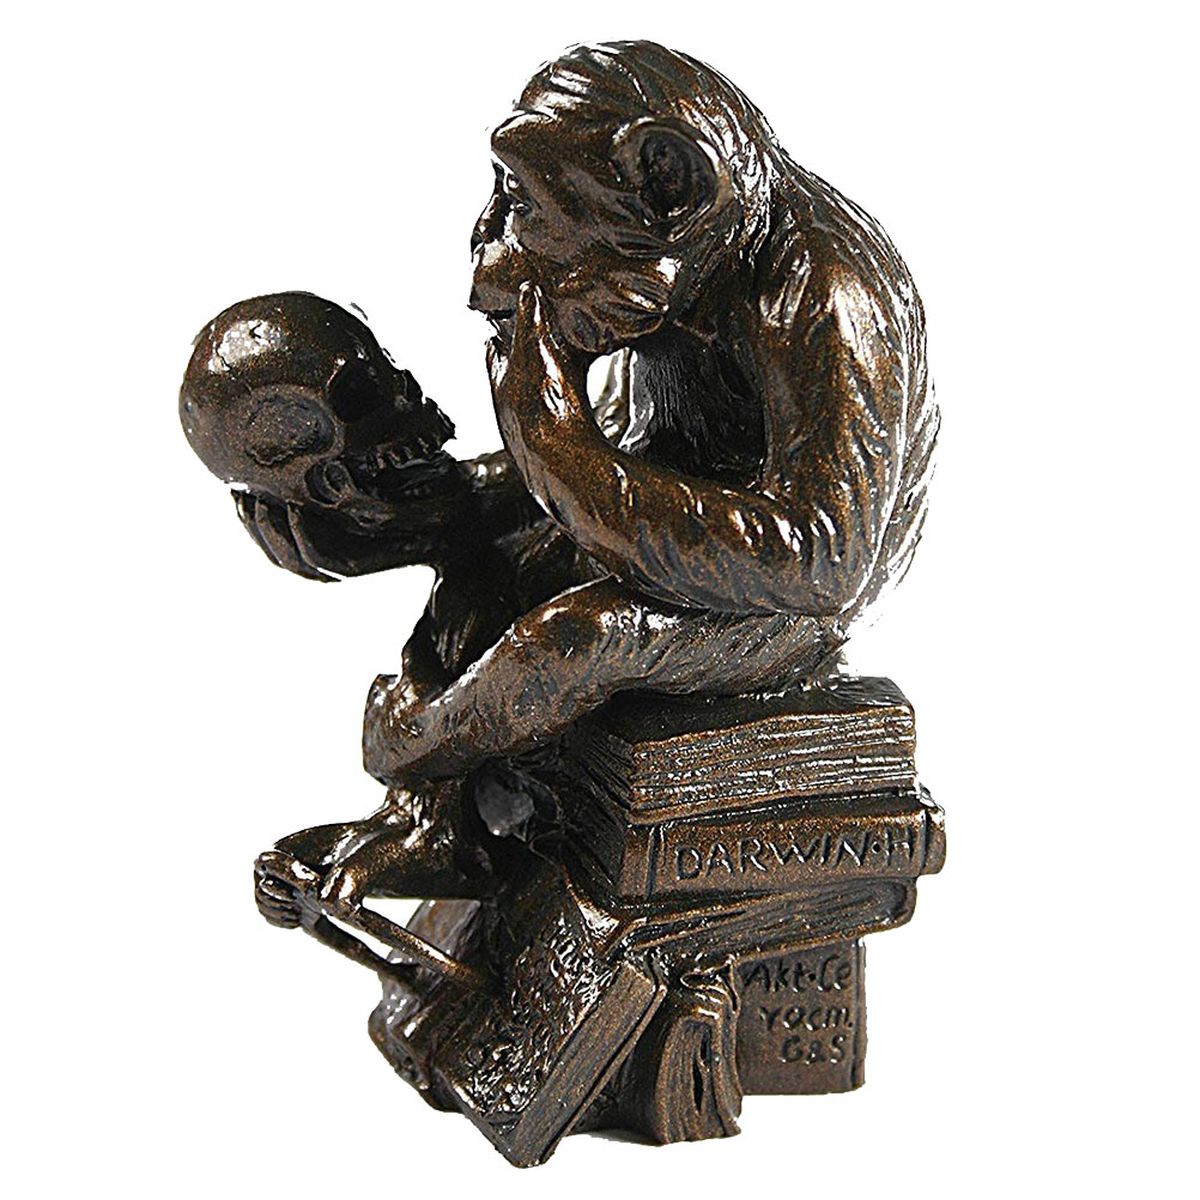 Figurine miniature reproduction Le Singe savant de Rheinhold